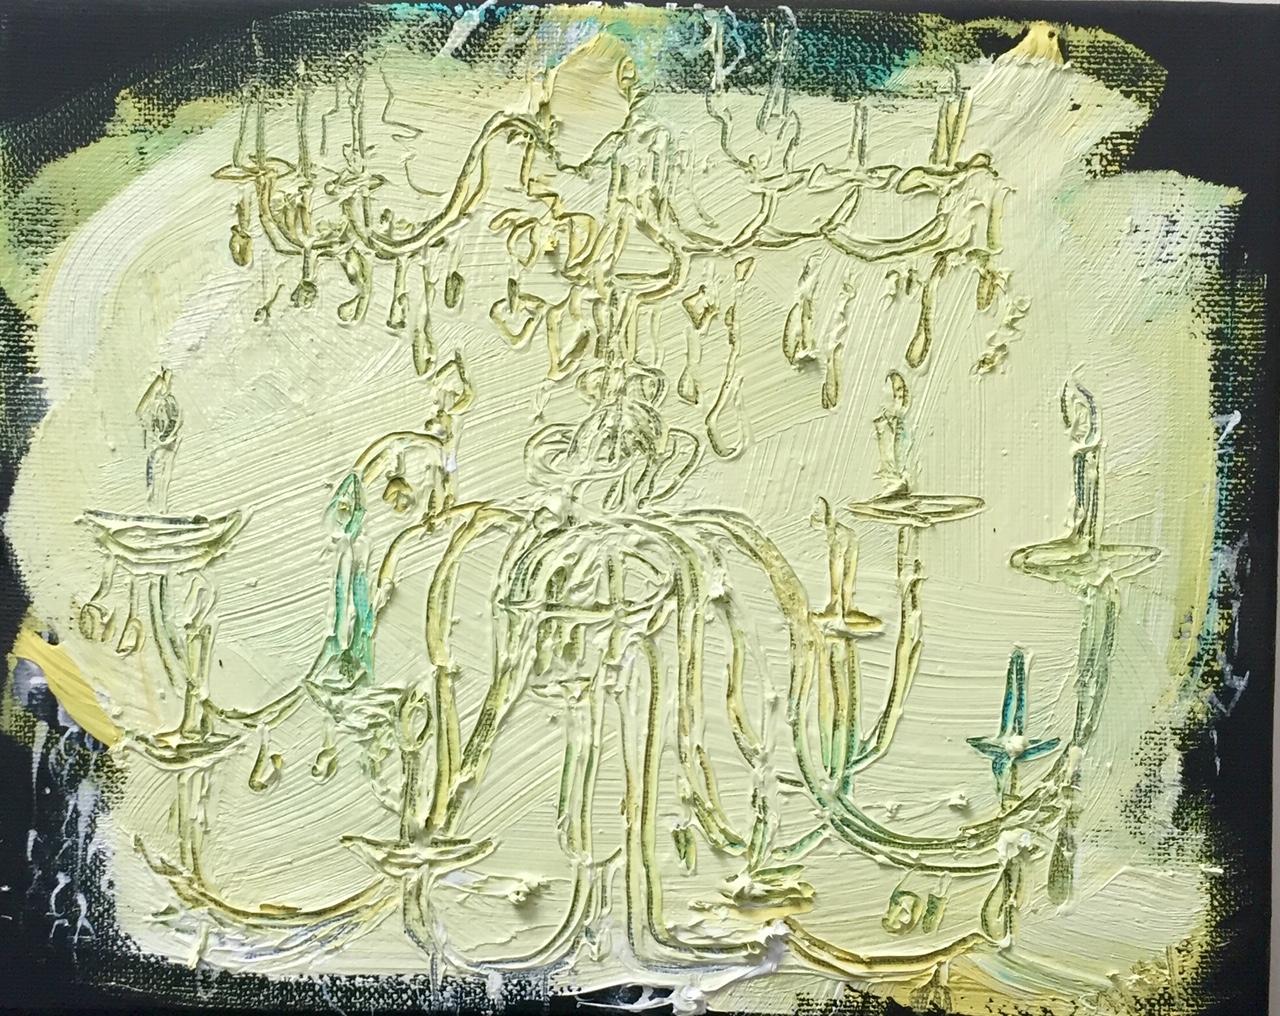 Lizbeth Mitty, Nickle Beach, 2017, huile sur toile, 15,2 x 20,3 cm, Symbolist